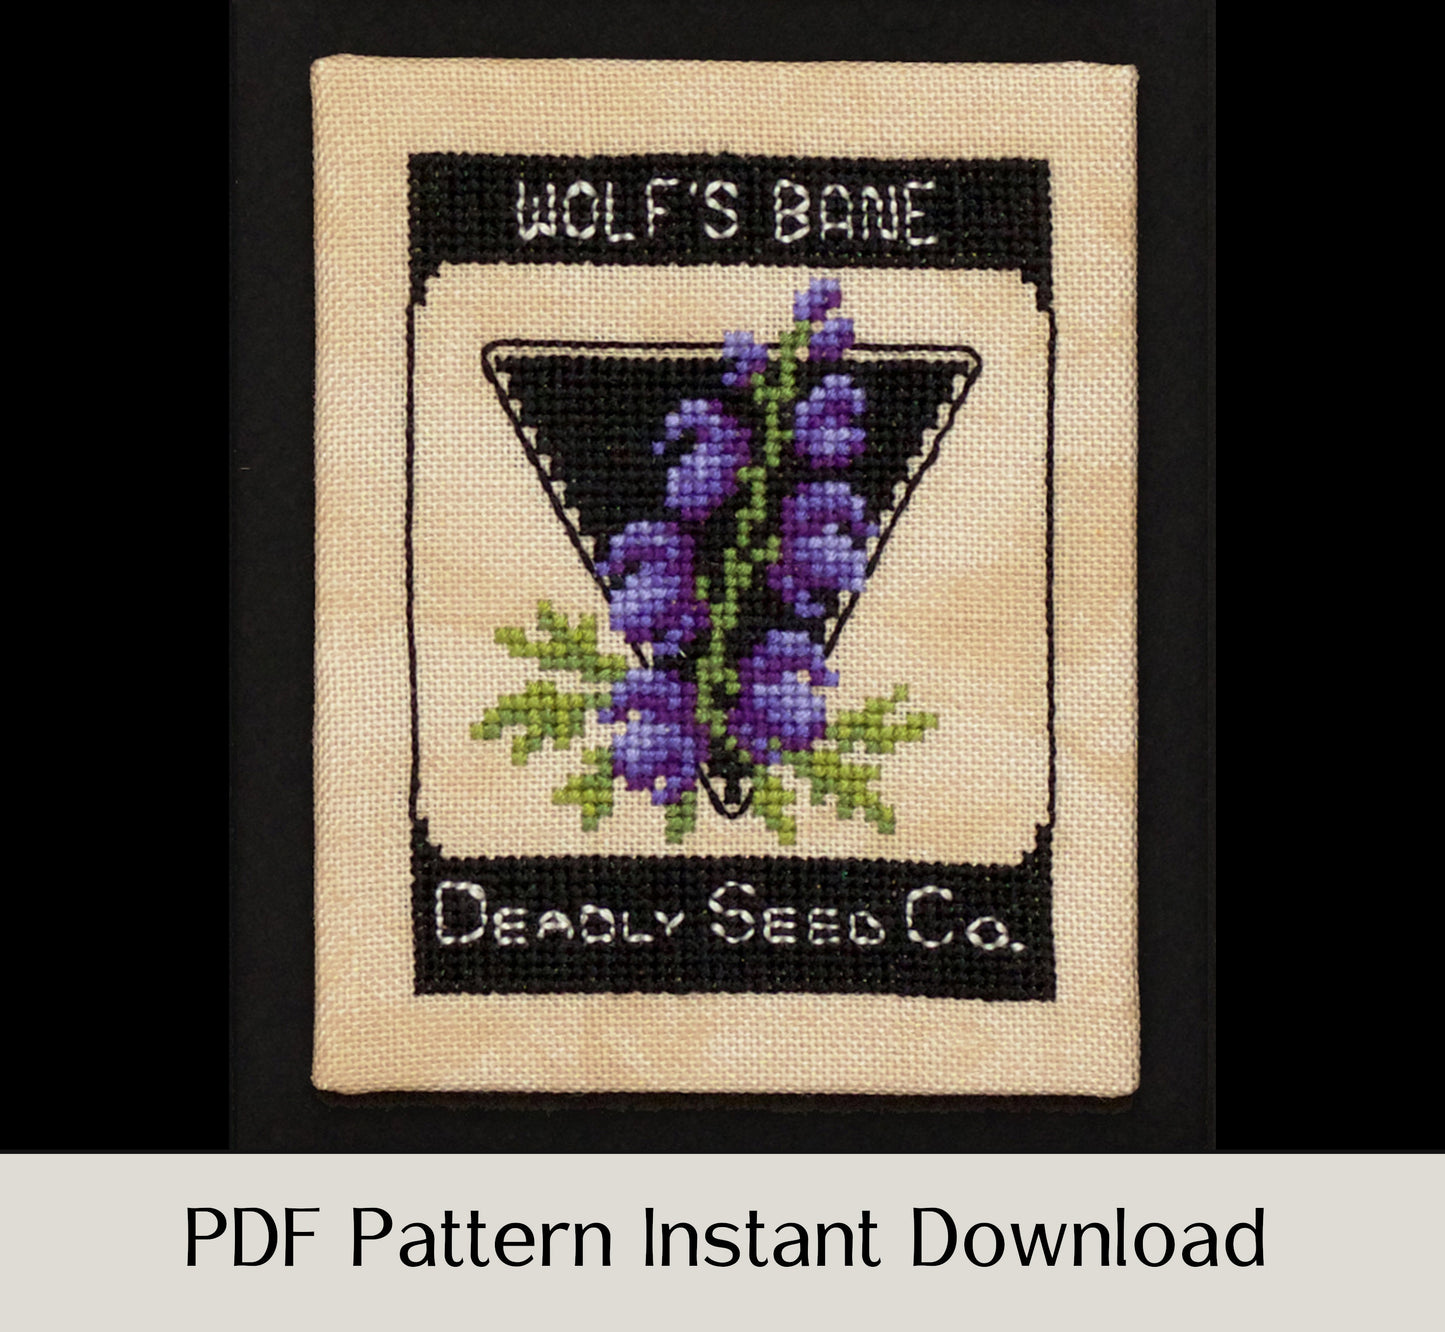 Deadly Seed Co. - Digital PDF Cross Stitch Pattern